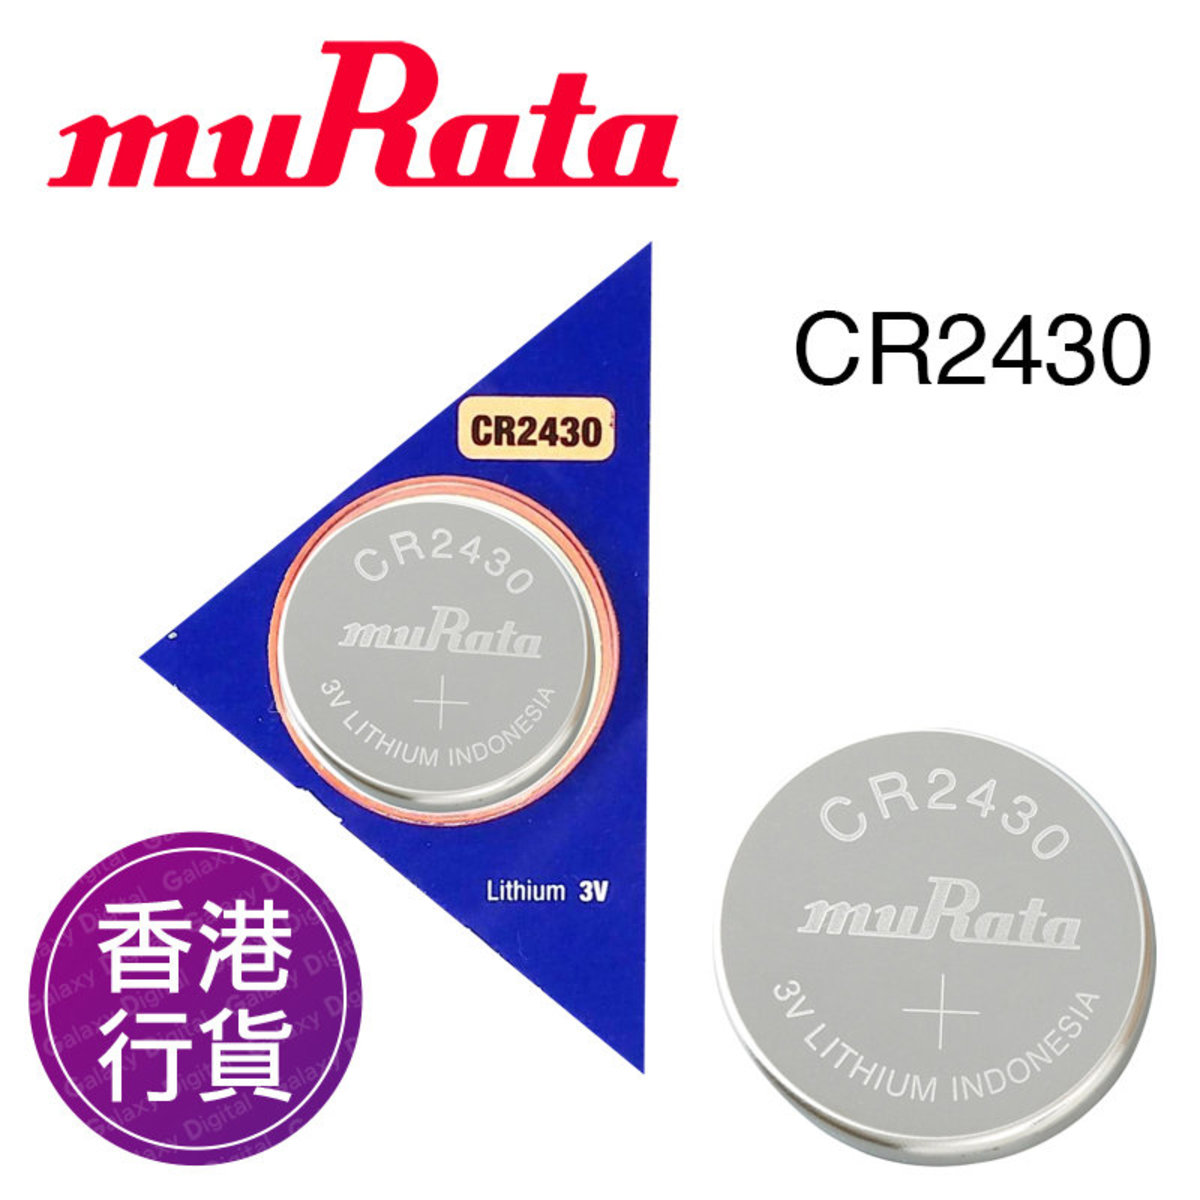 Murata CR2430